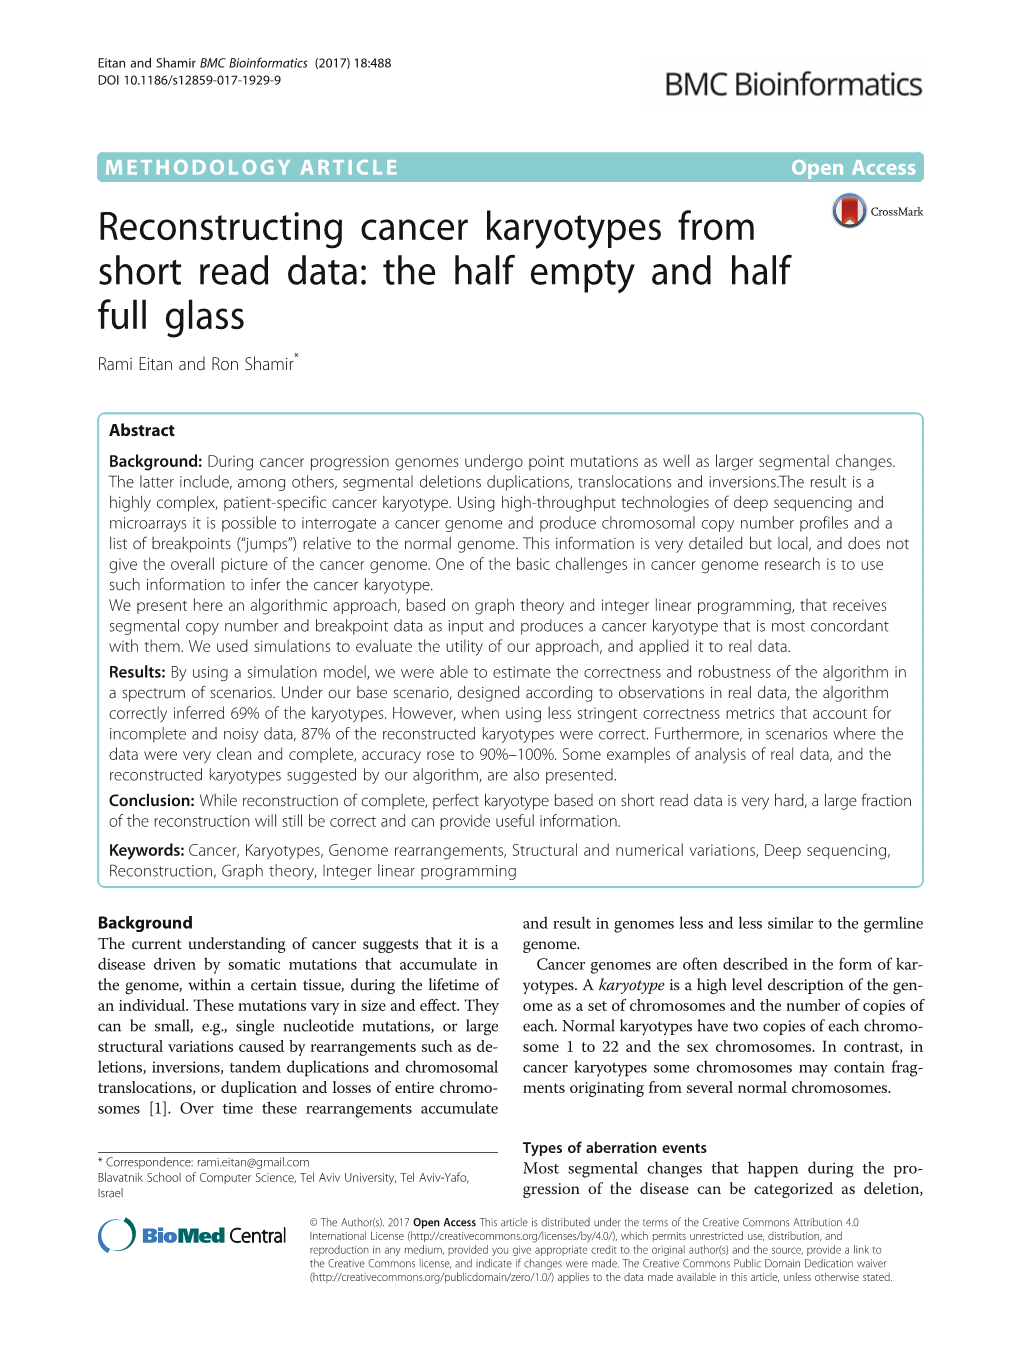 Reconstructing Cancer Karyotypes from Short Read Data: the Half Empty and Half Full Glass Rami Eitan and Ron Shamir*